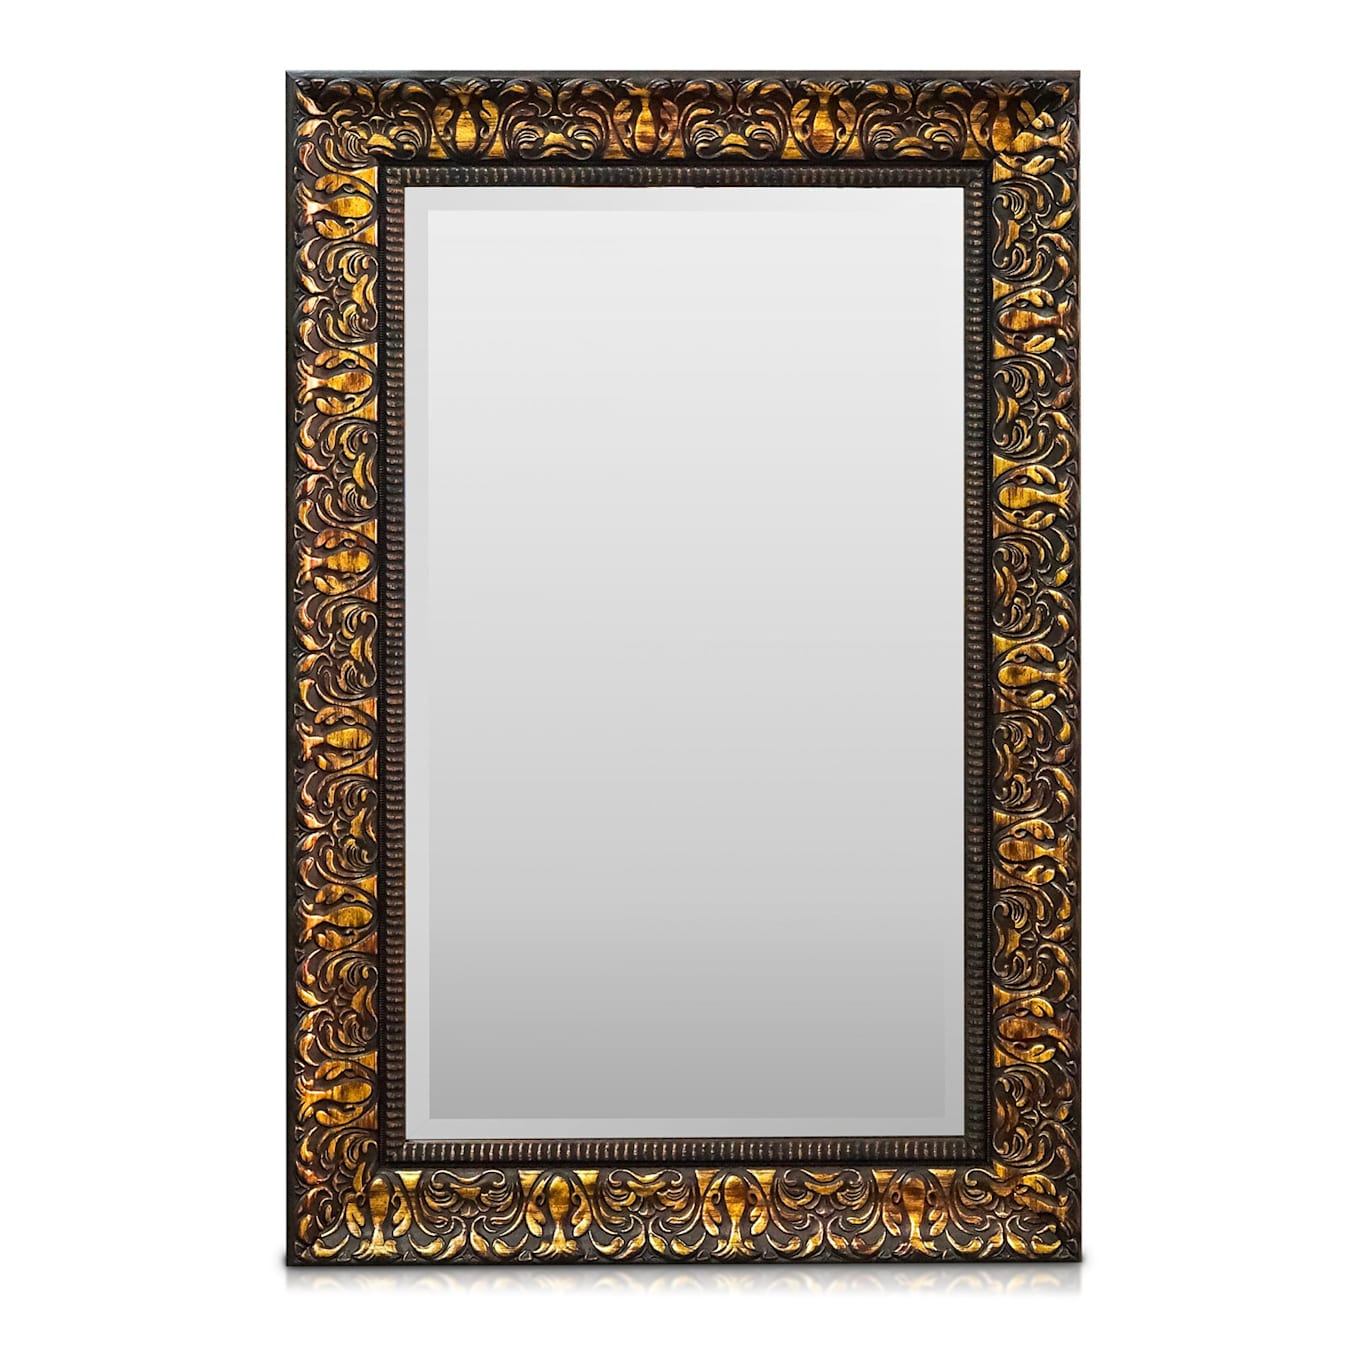 Espejo de pared rectangular con marco de madera